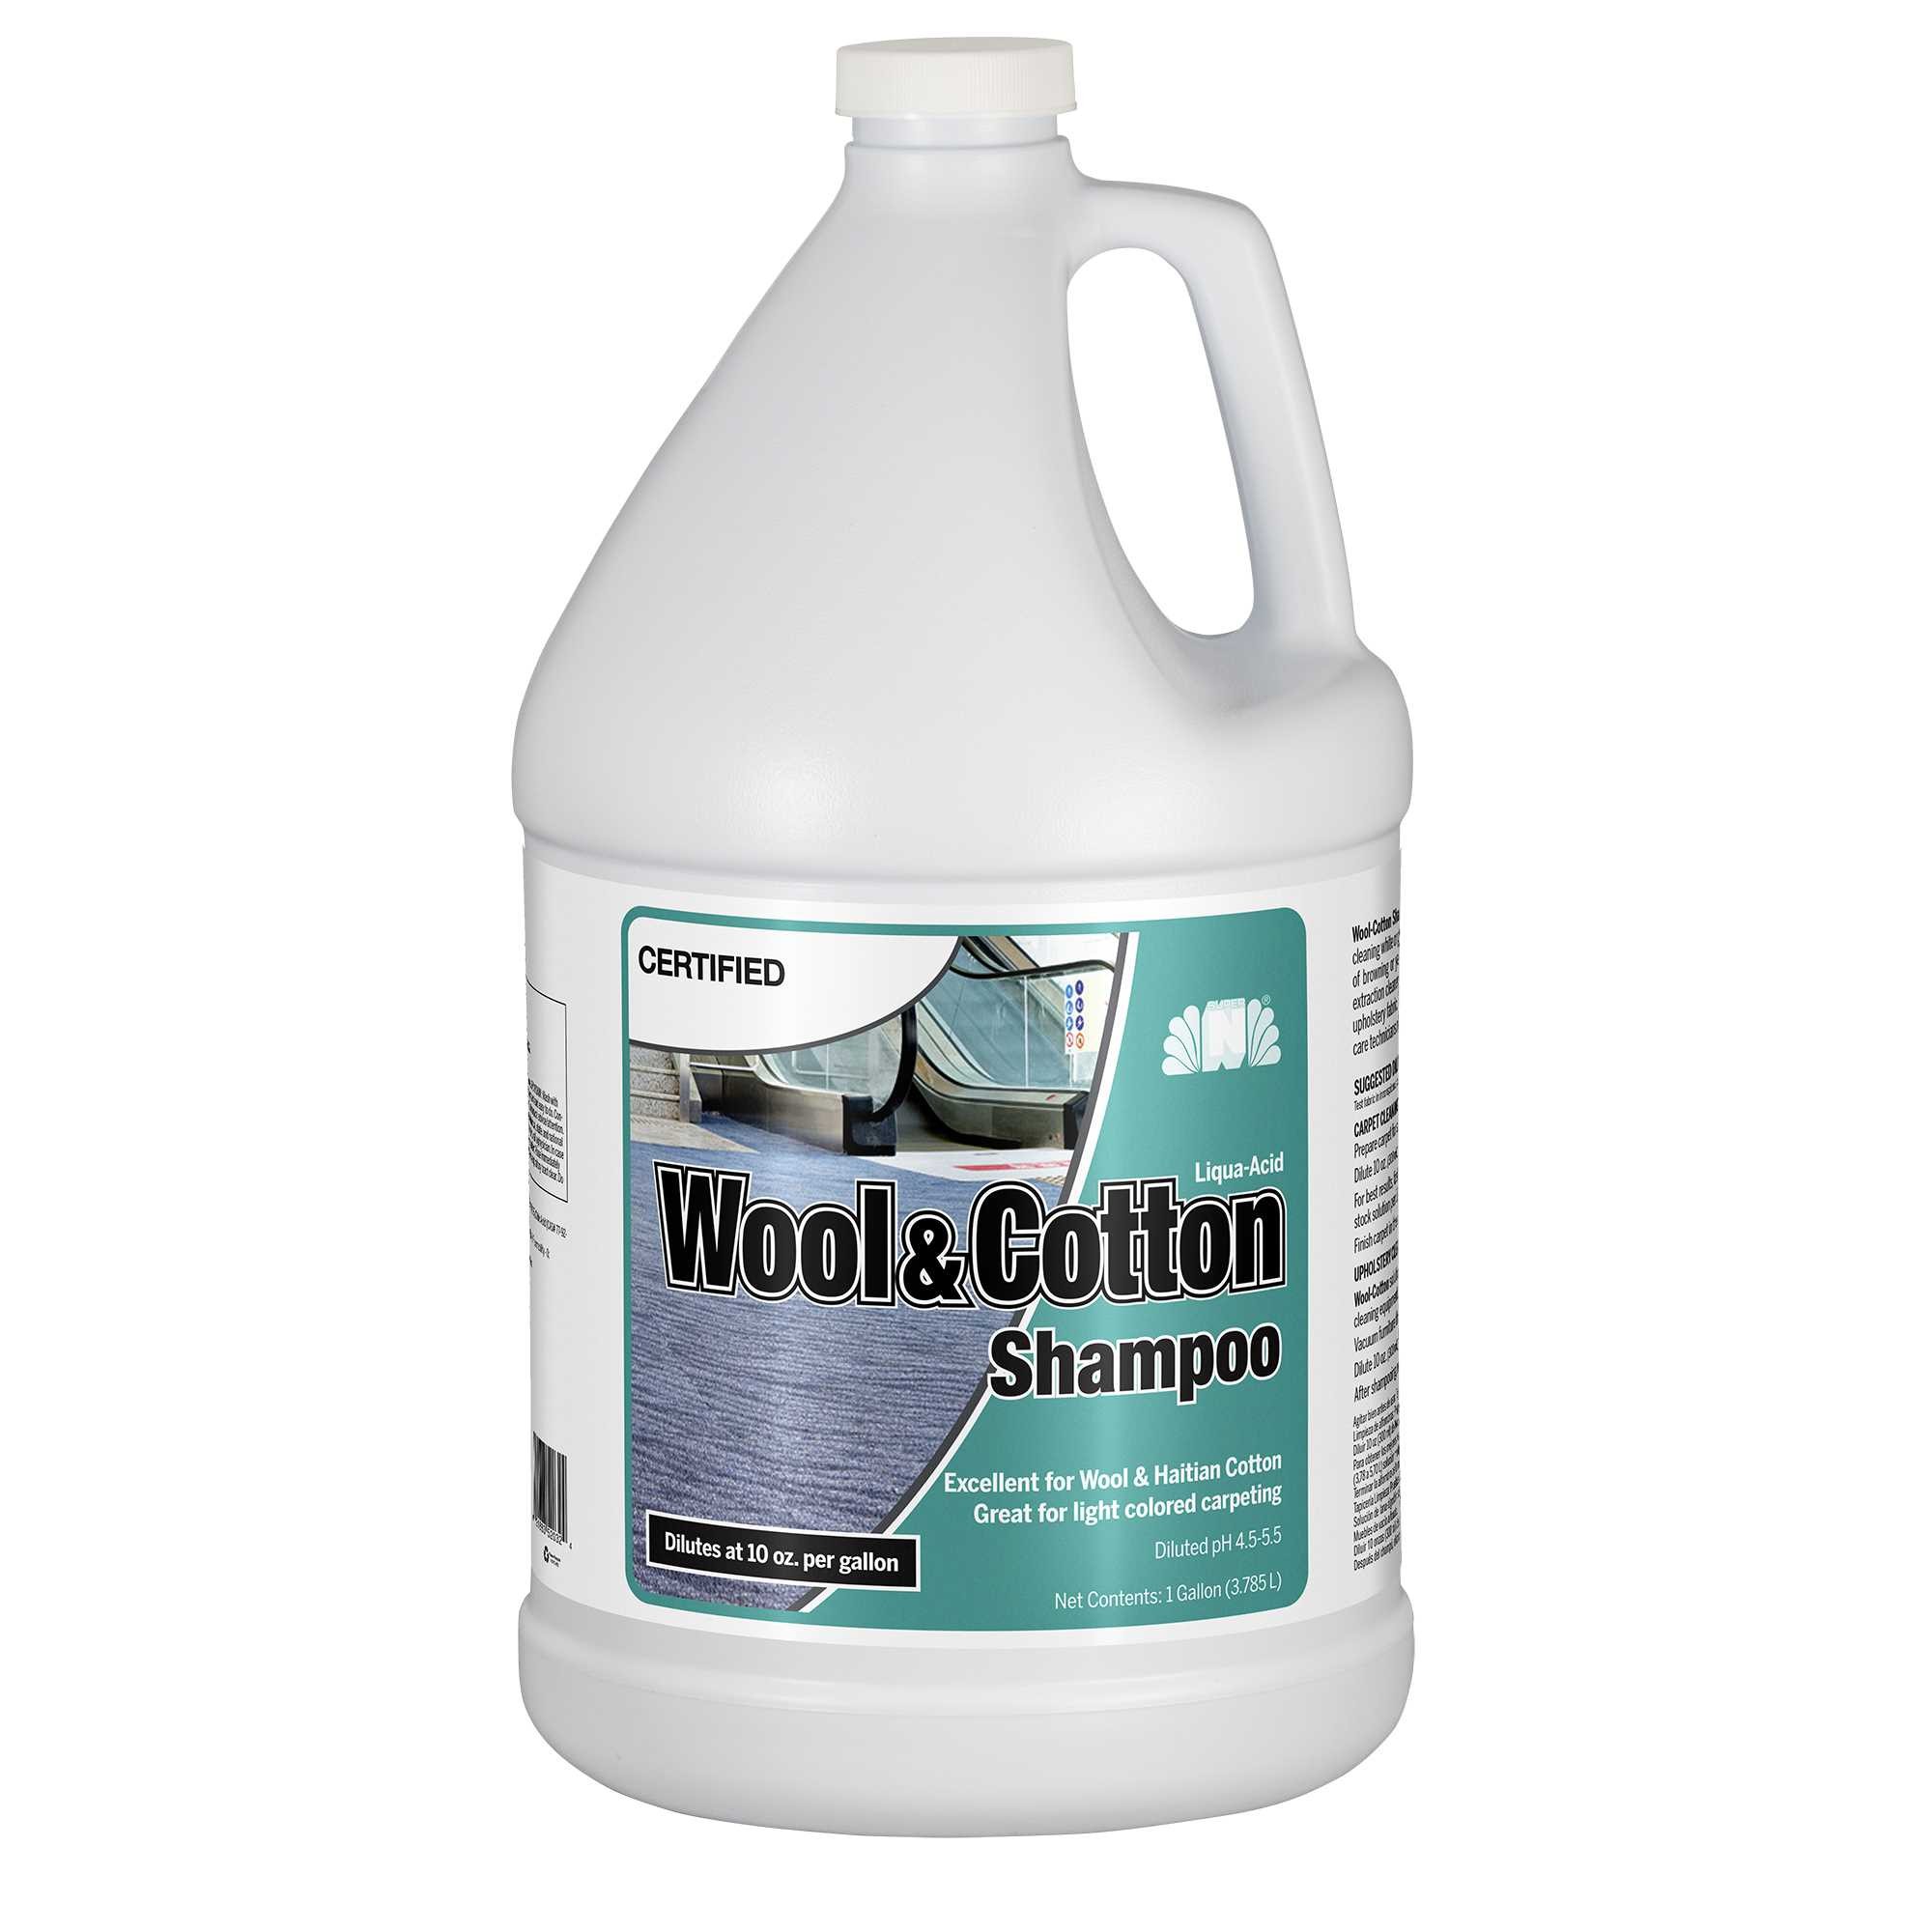 NILodor+Certified+Wool+%26+Cotton+Shampoo+%28Liqua-Acid%29+-+1+Gallon.+C530-005+%5BCI-212%5D+